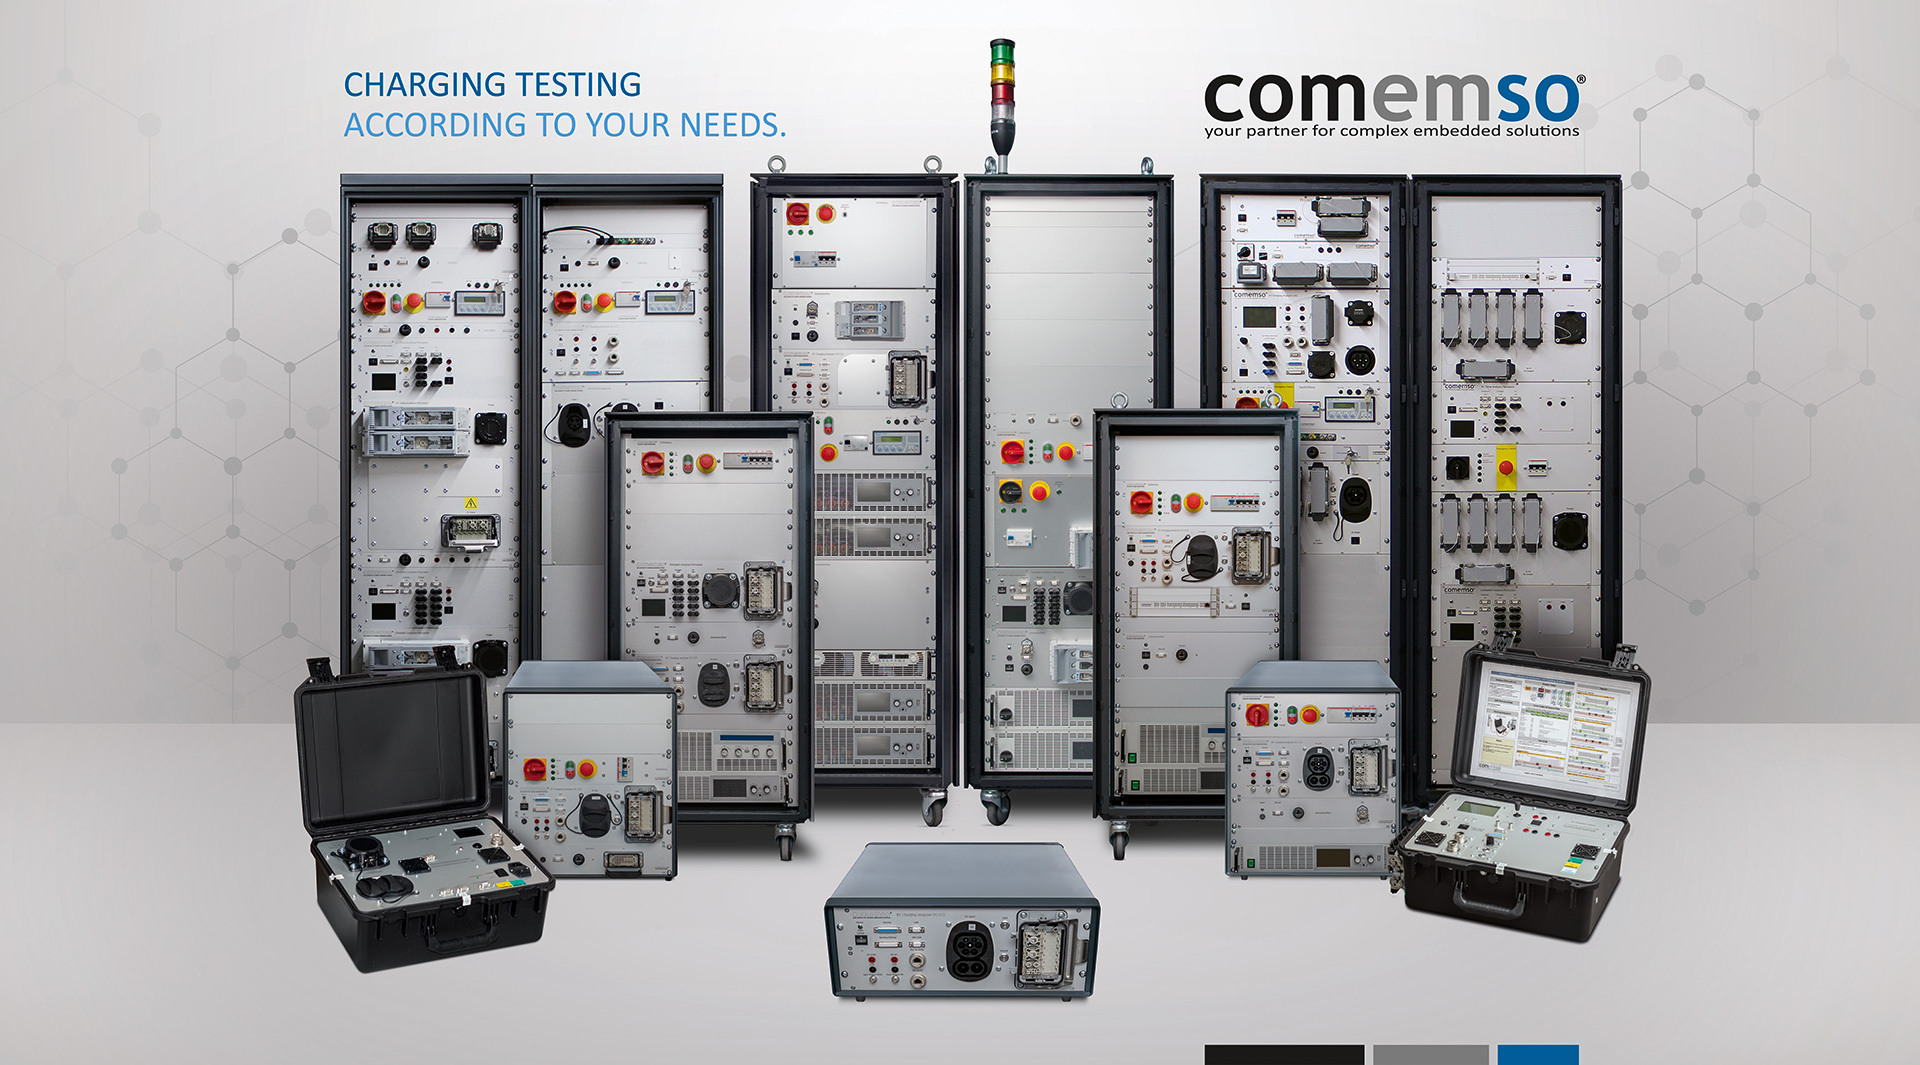 Comemso充电分析仪